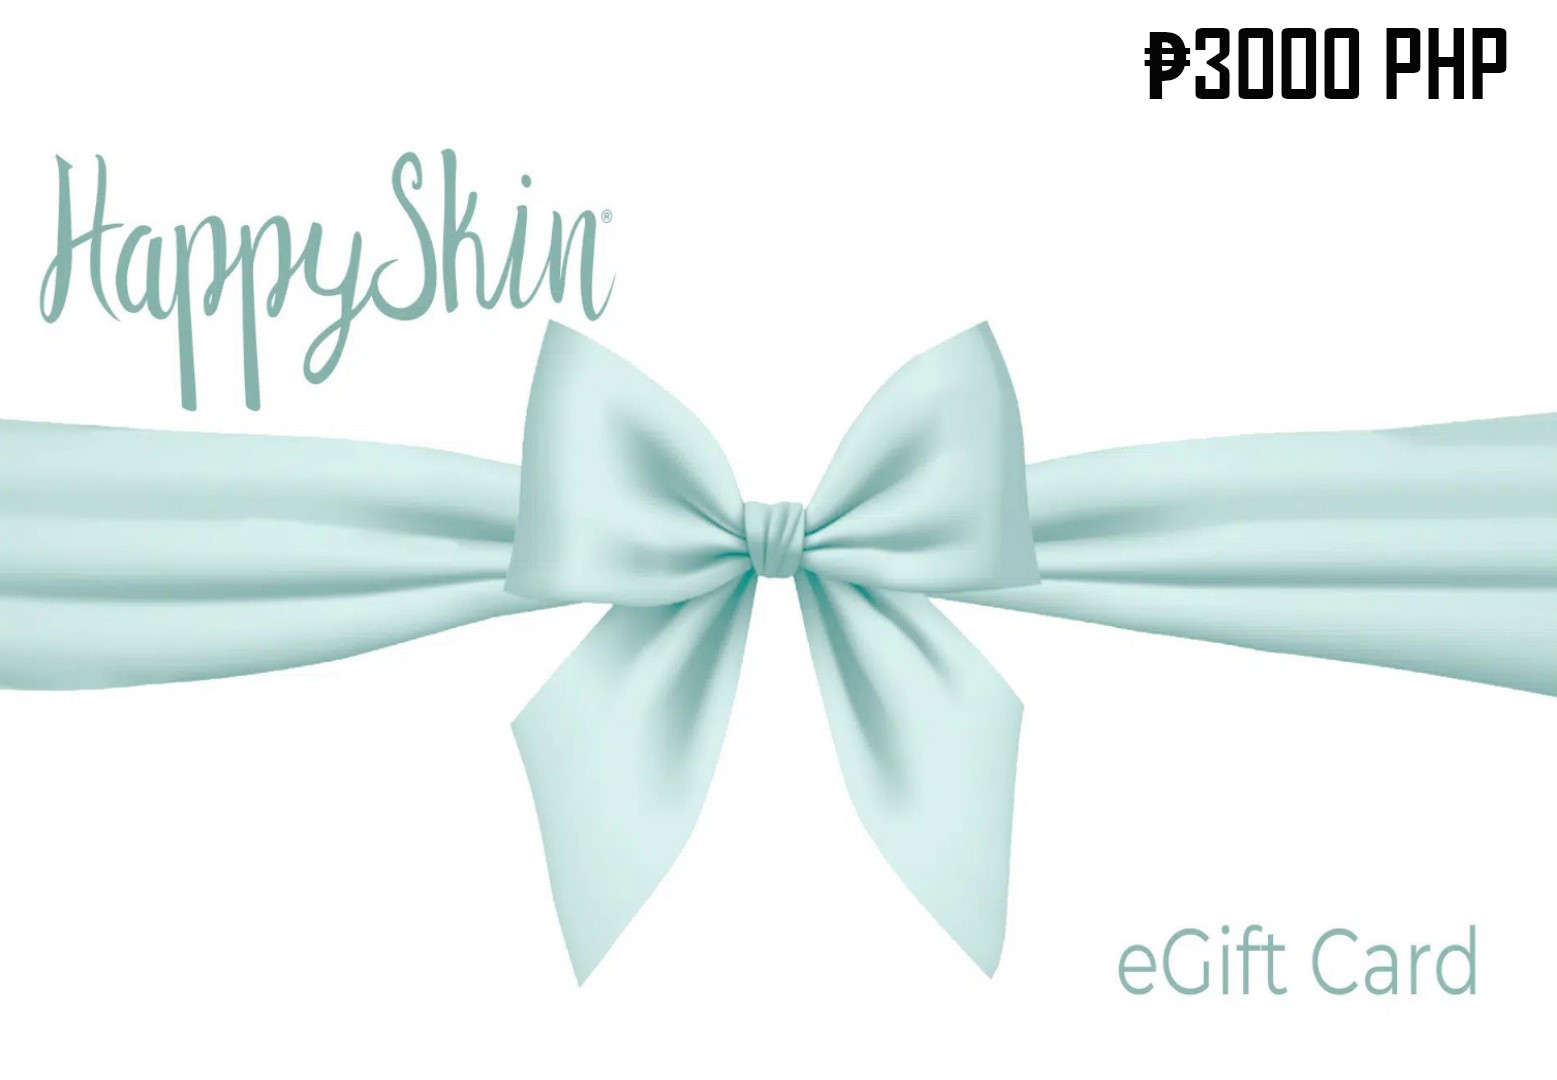 [$ 62.52] Happy Skin ₱3000 PH Gift Card